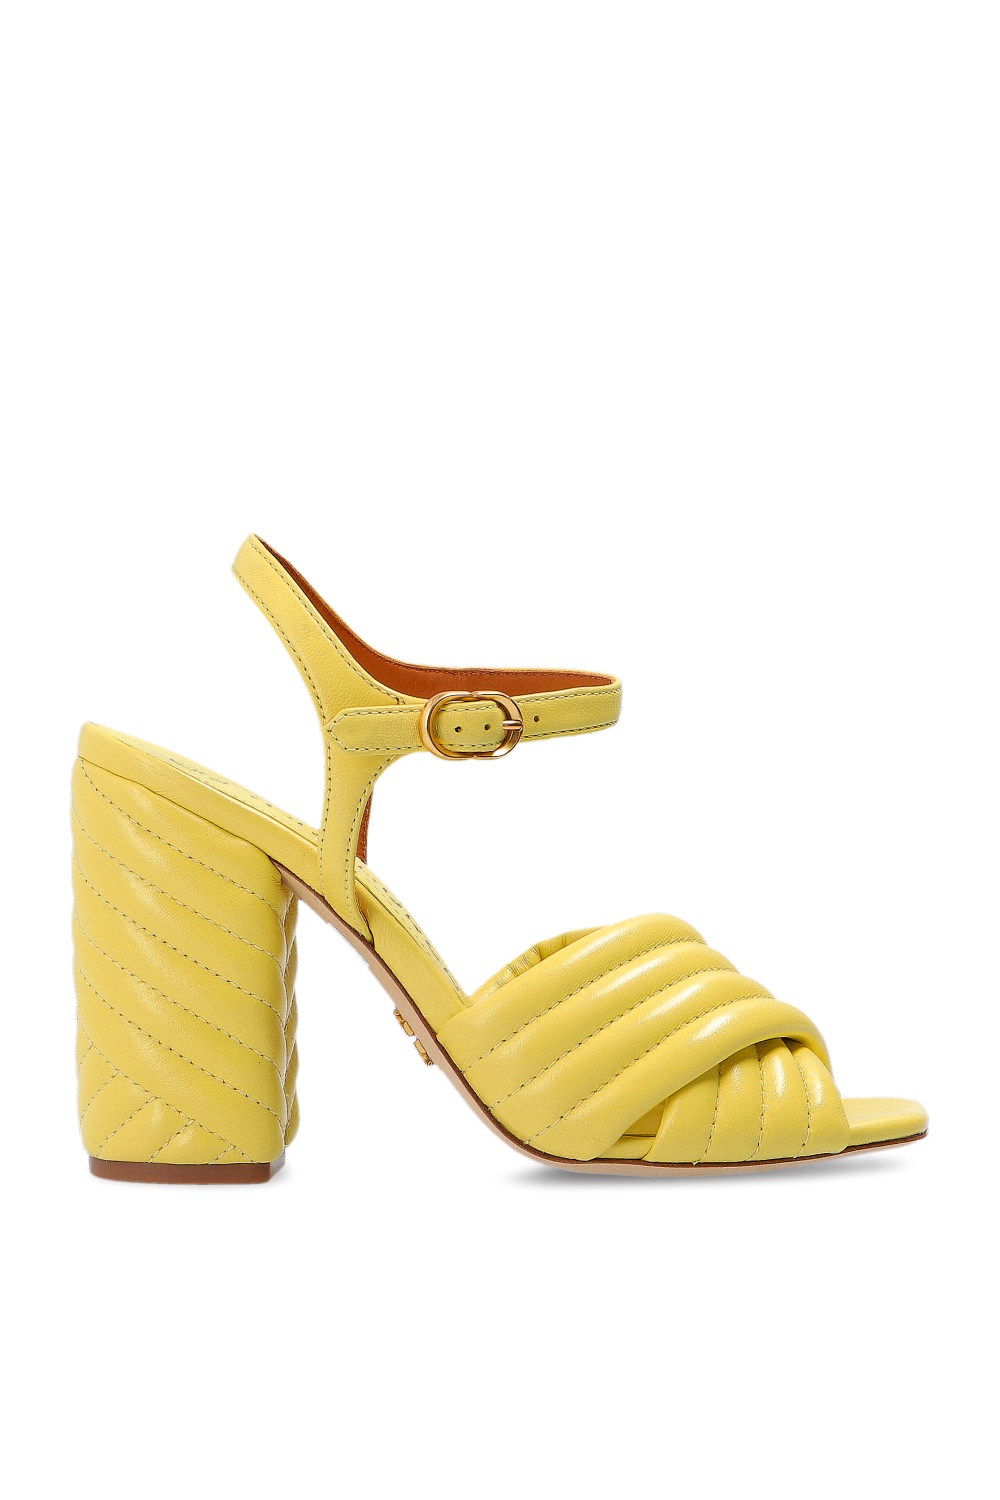 Tory Burch 'Kira' heeled sandals | Women's Shoes | Vitkac